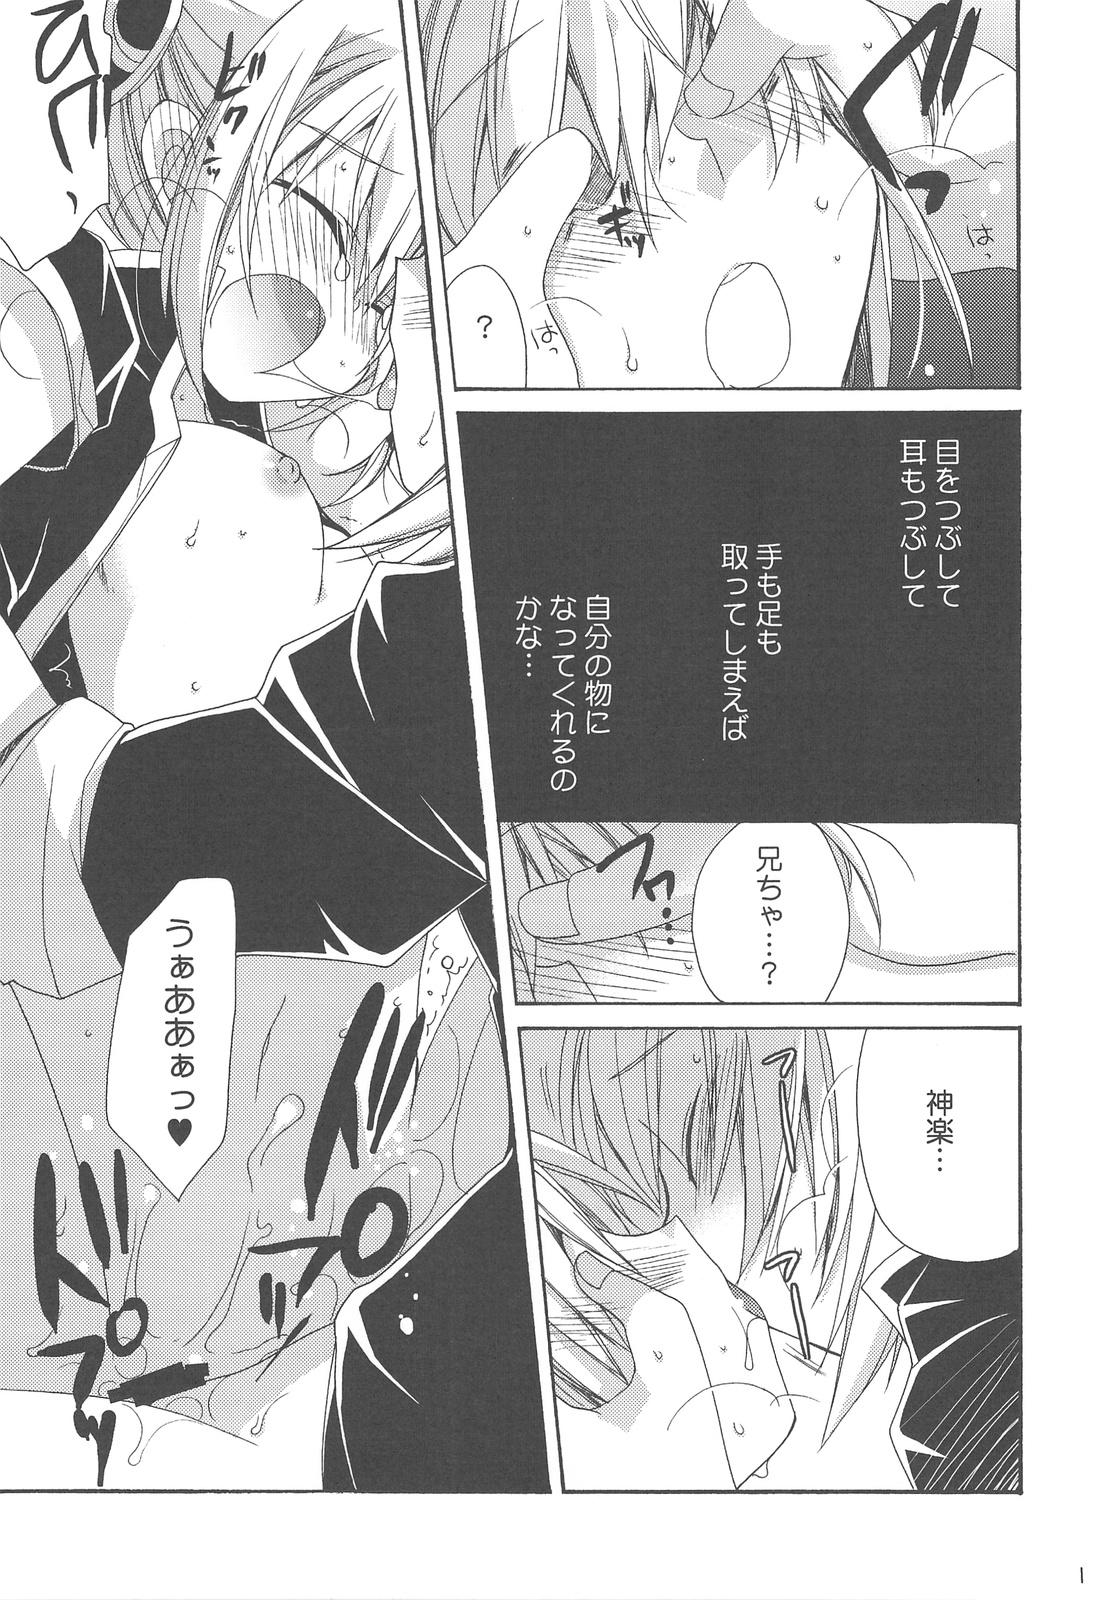 Nurse heroine syndrome - Gintama 18 Year Old - Page 10